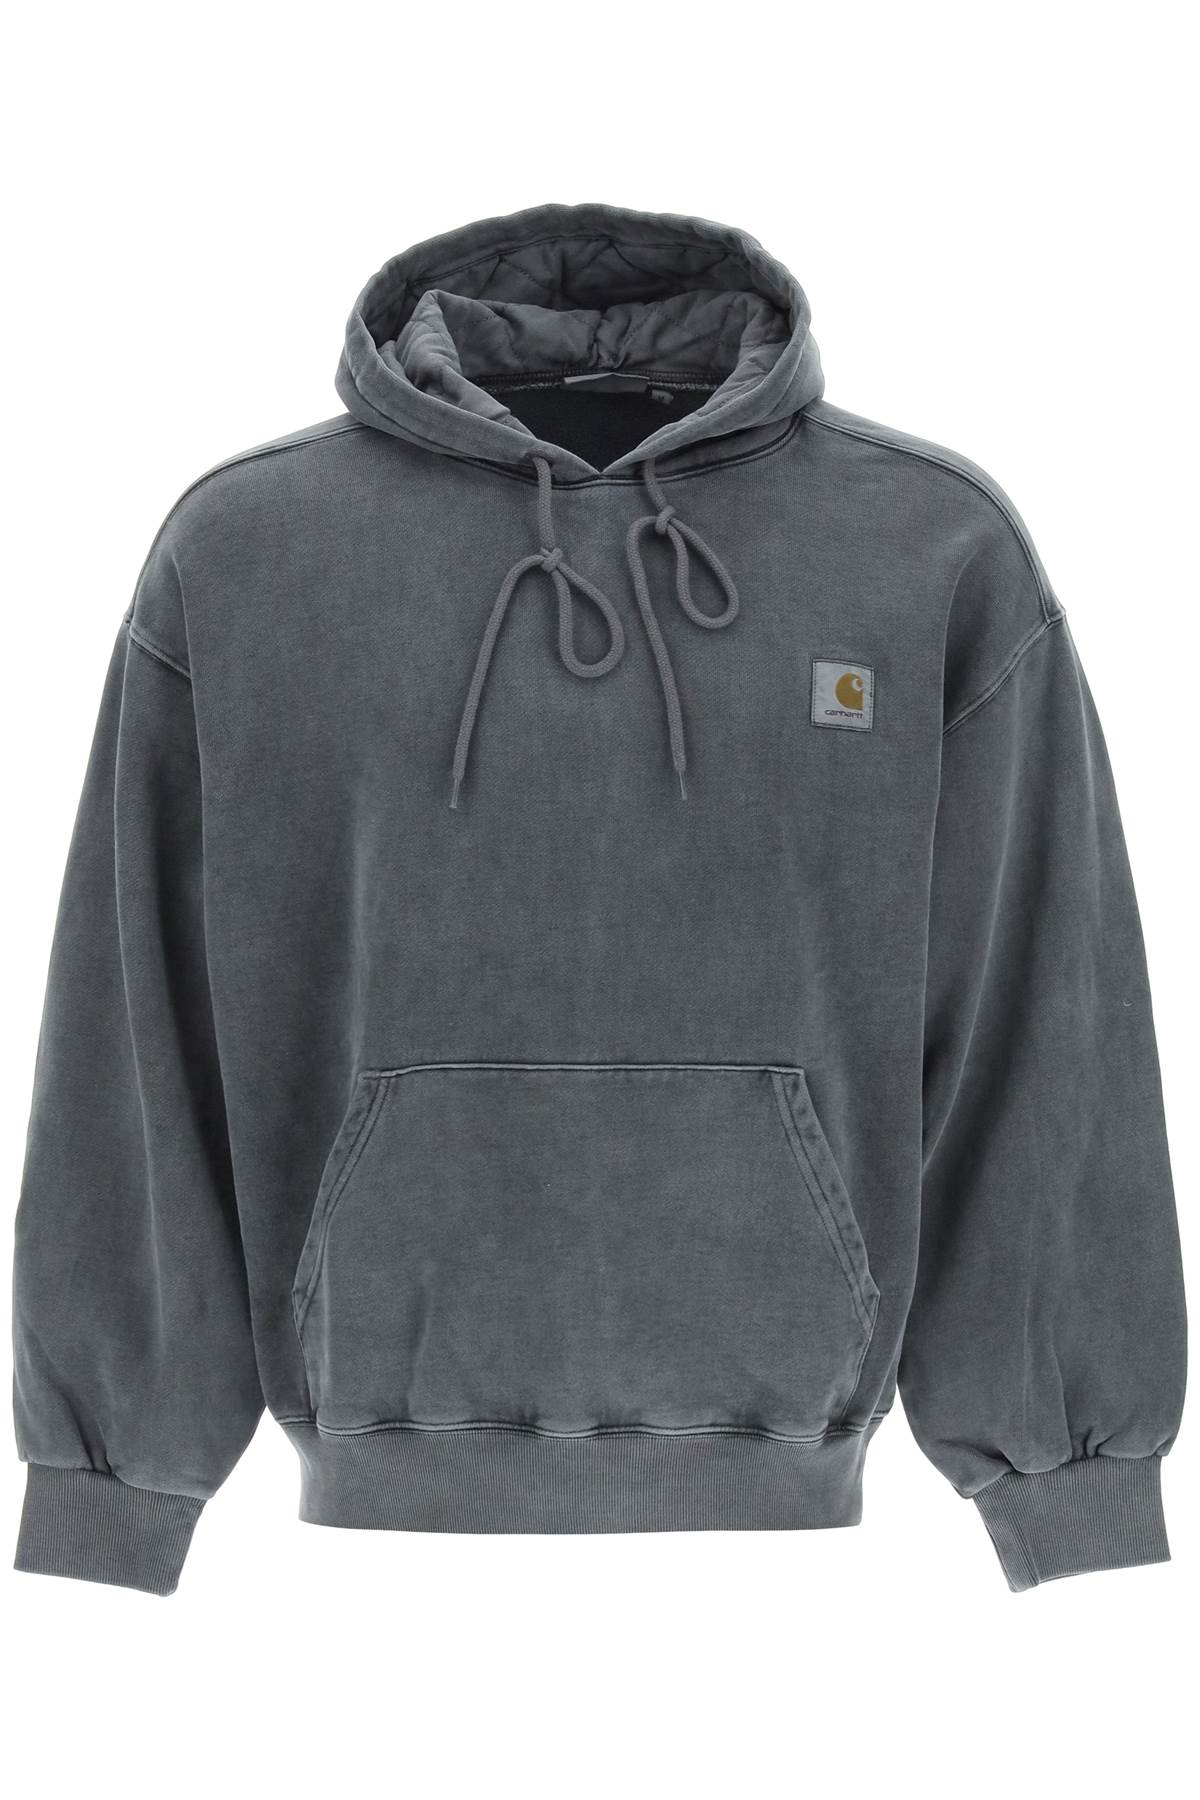 Carhartt Vista Sweatshirt With Padded Hood